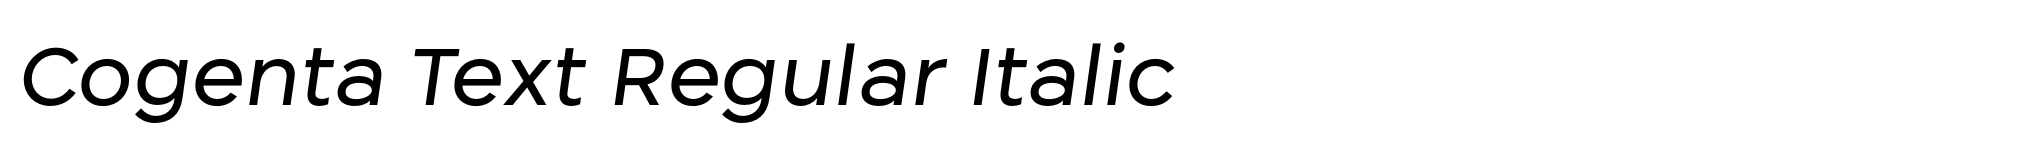 Cogenta Text Regular Italic image